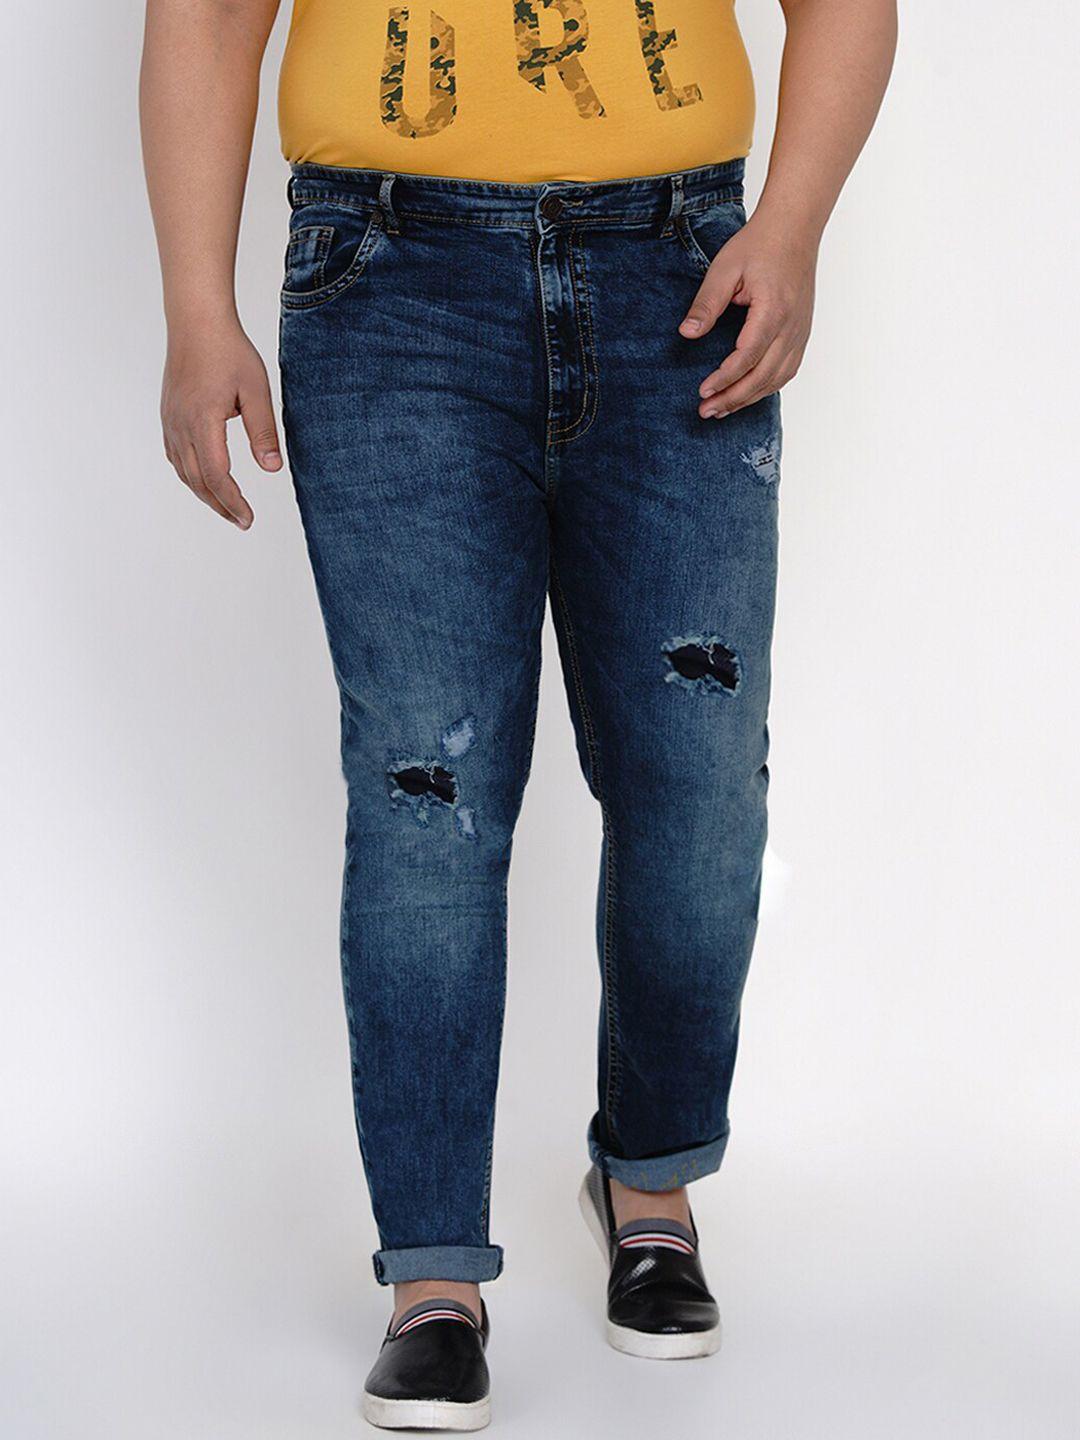 john pride plus size men navy blue mildly distressed light fade stretchable jeans